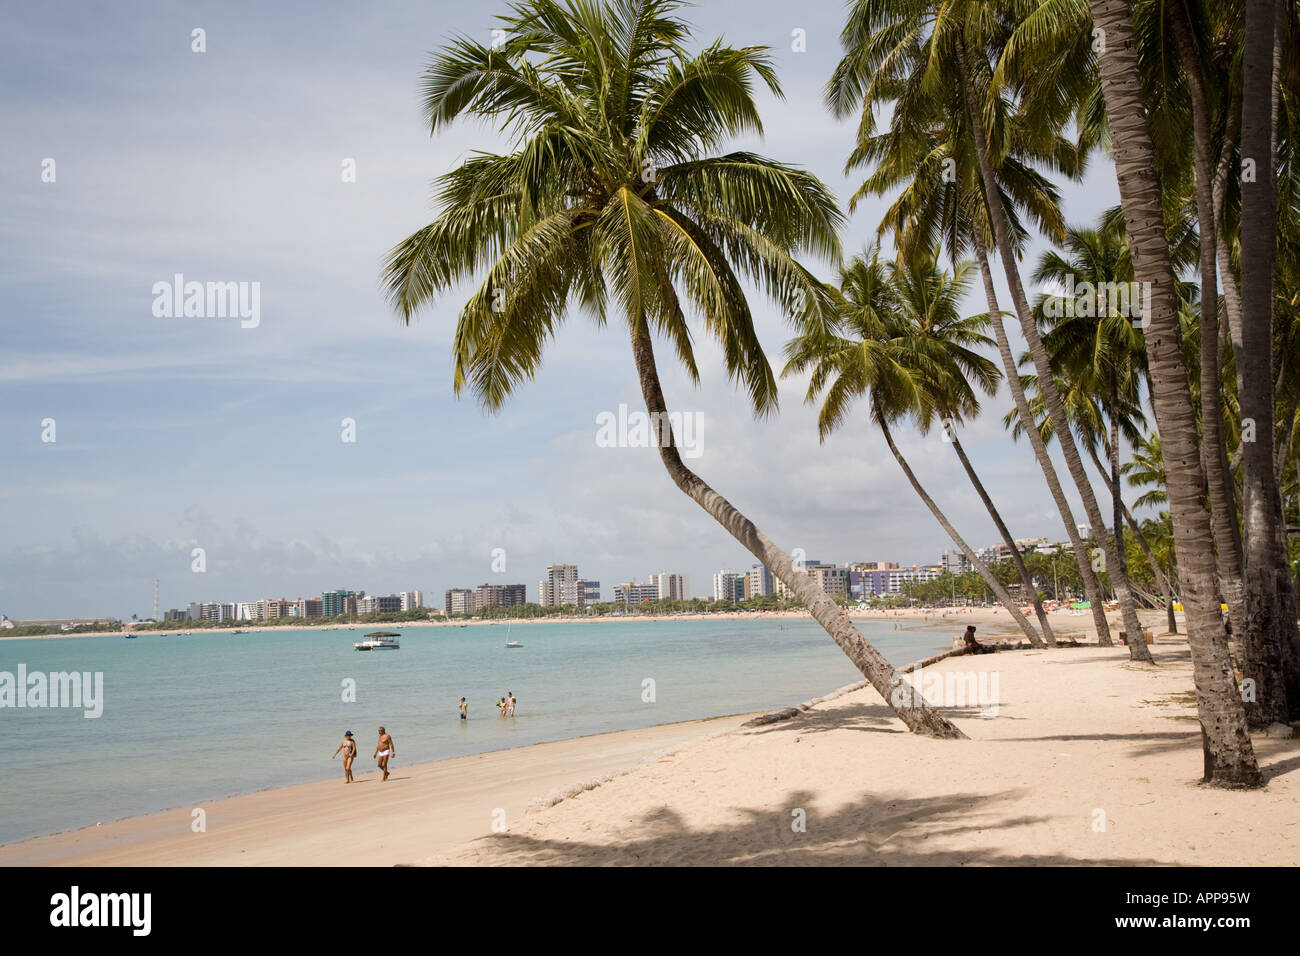 Praia de Pajucara Beach, Maceio, Alagoas, Brazil Stock Photo